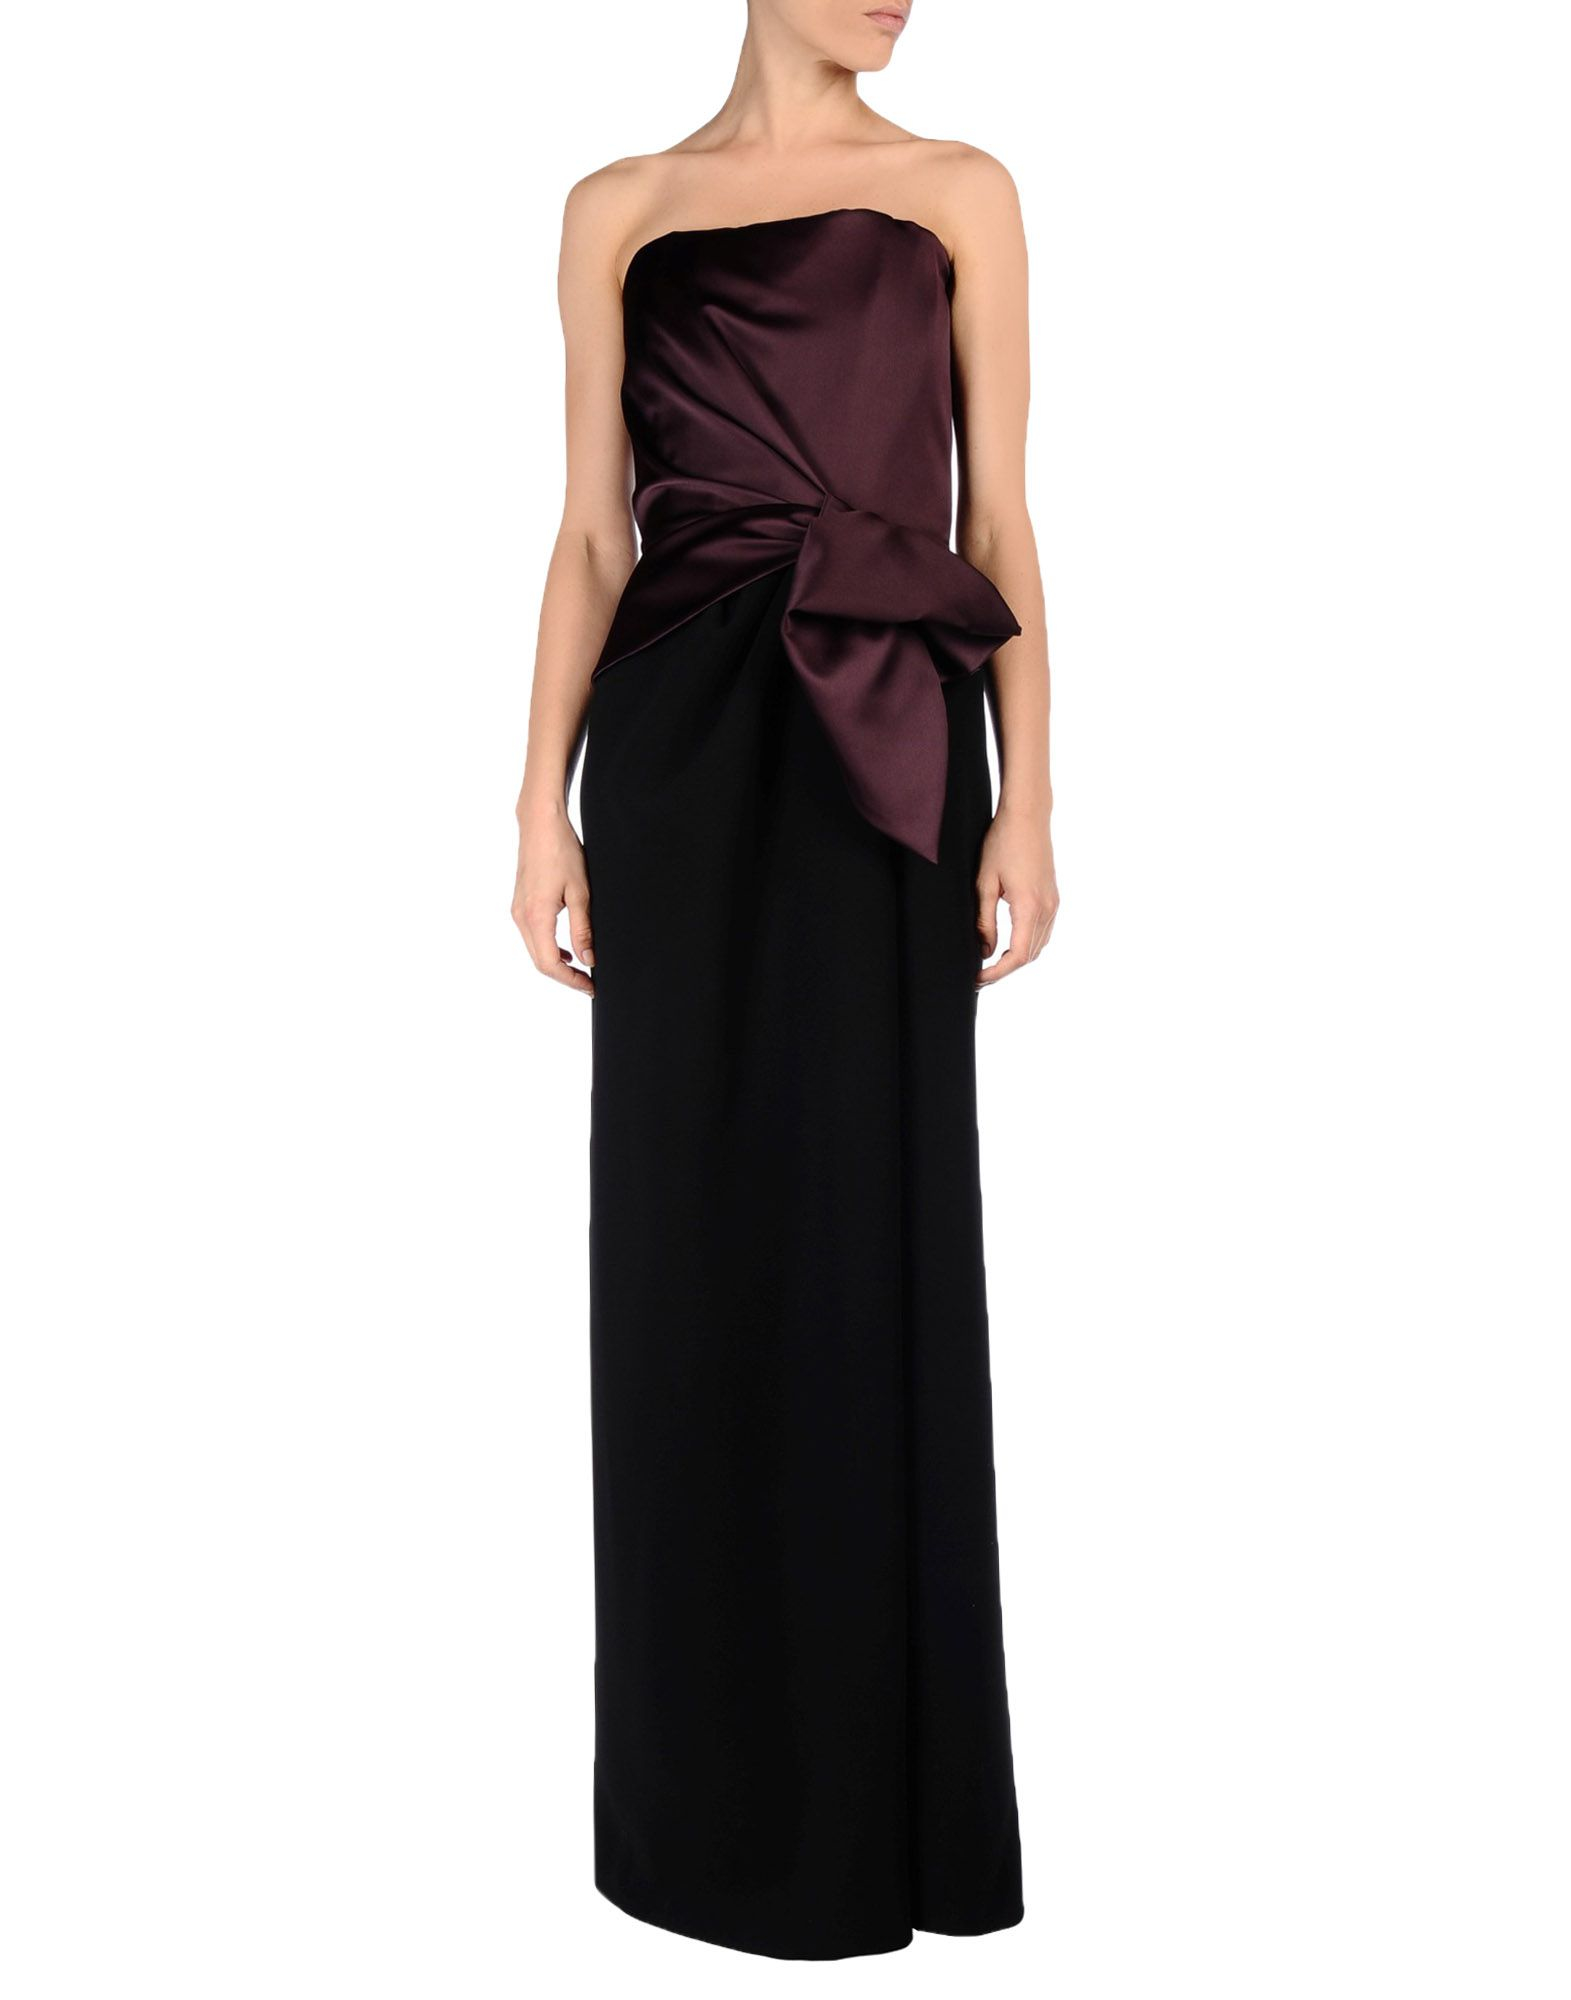 Lyst - Balenciaga Long Dress in Purple